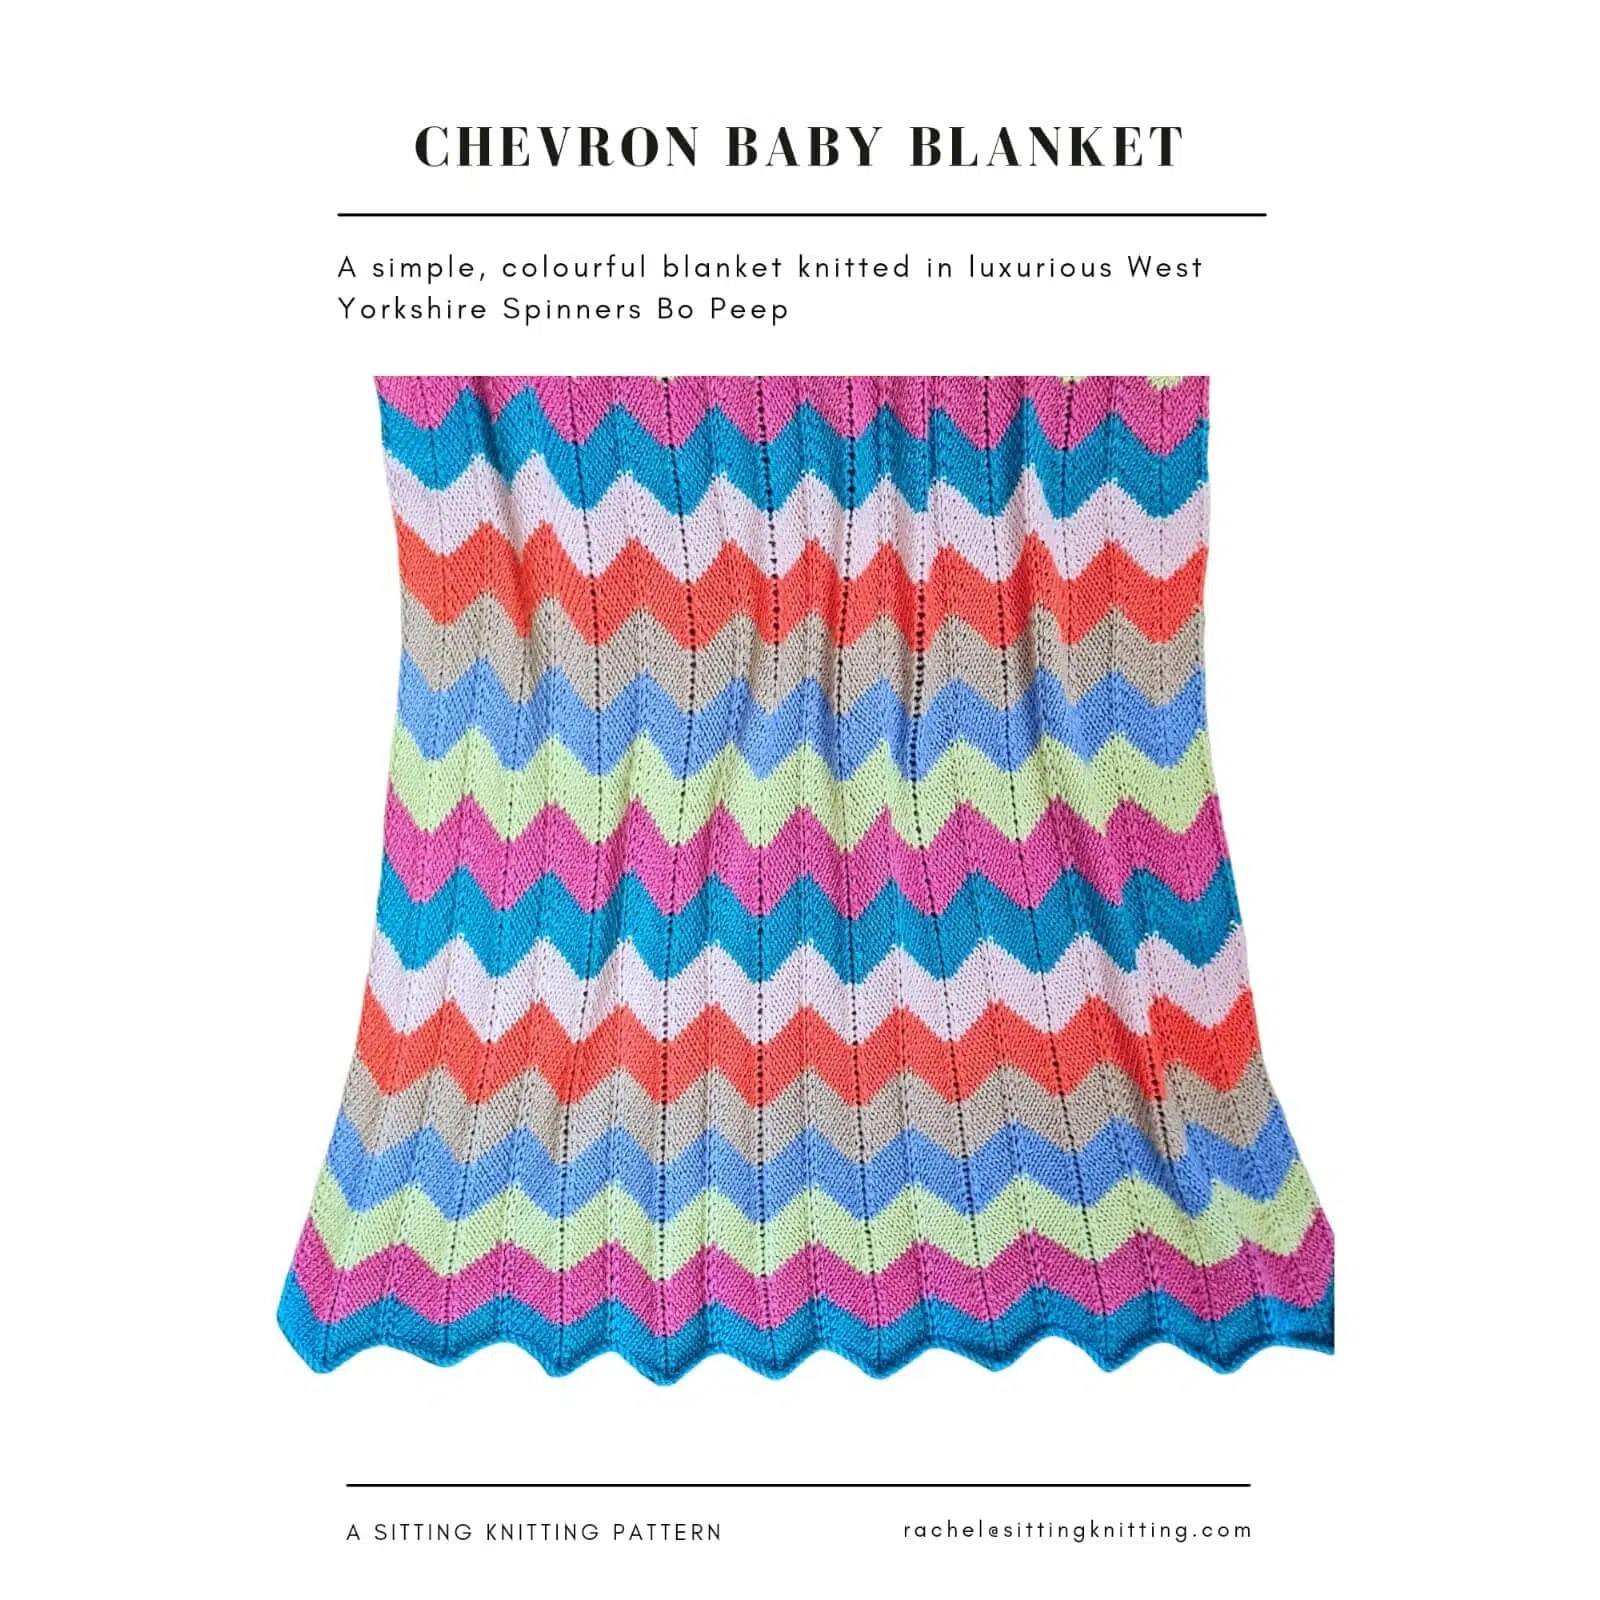 Sitting Knitting Pattern - Chevron Blanket (Bundle Pattern)